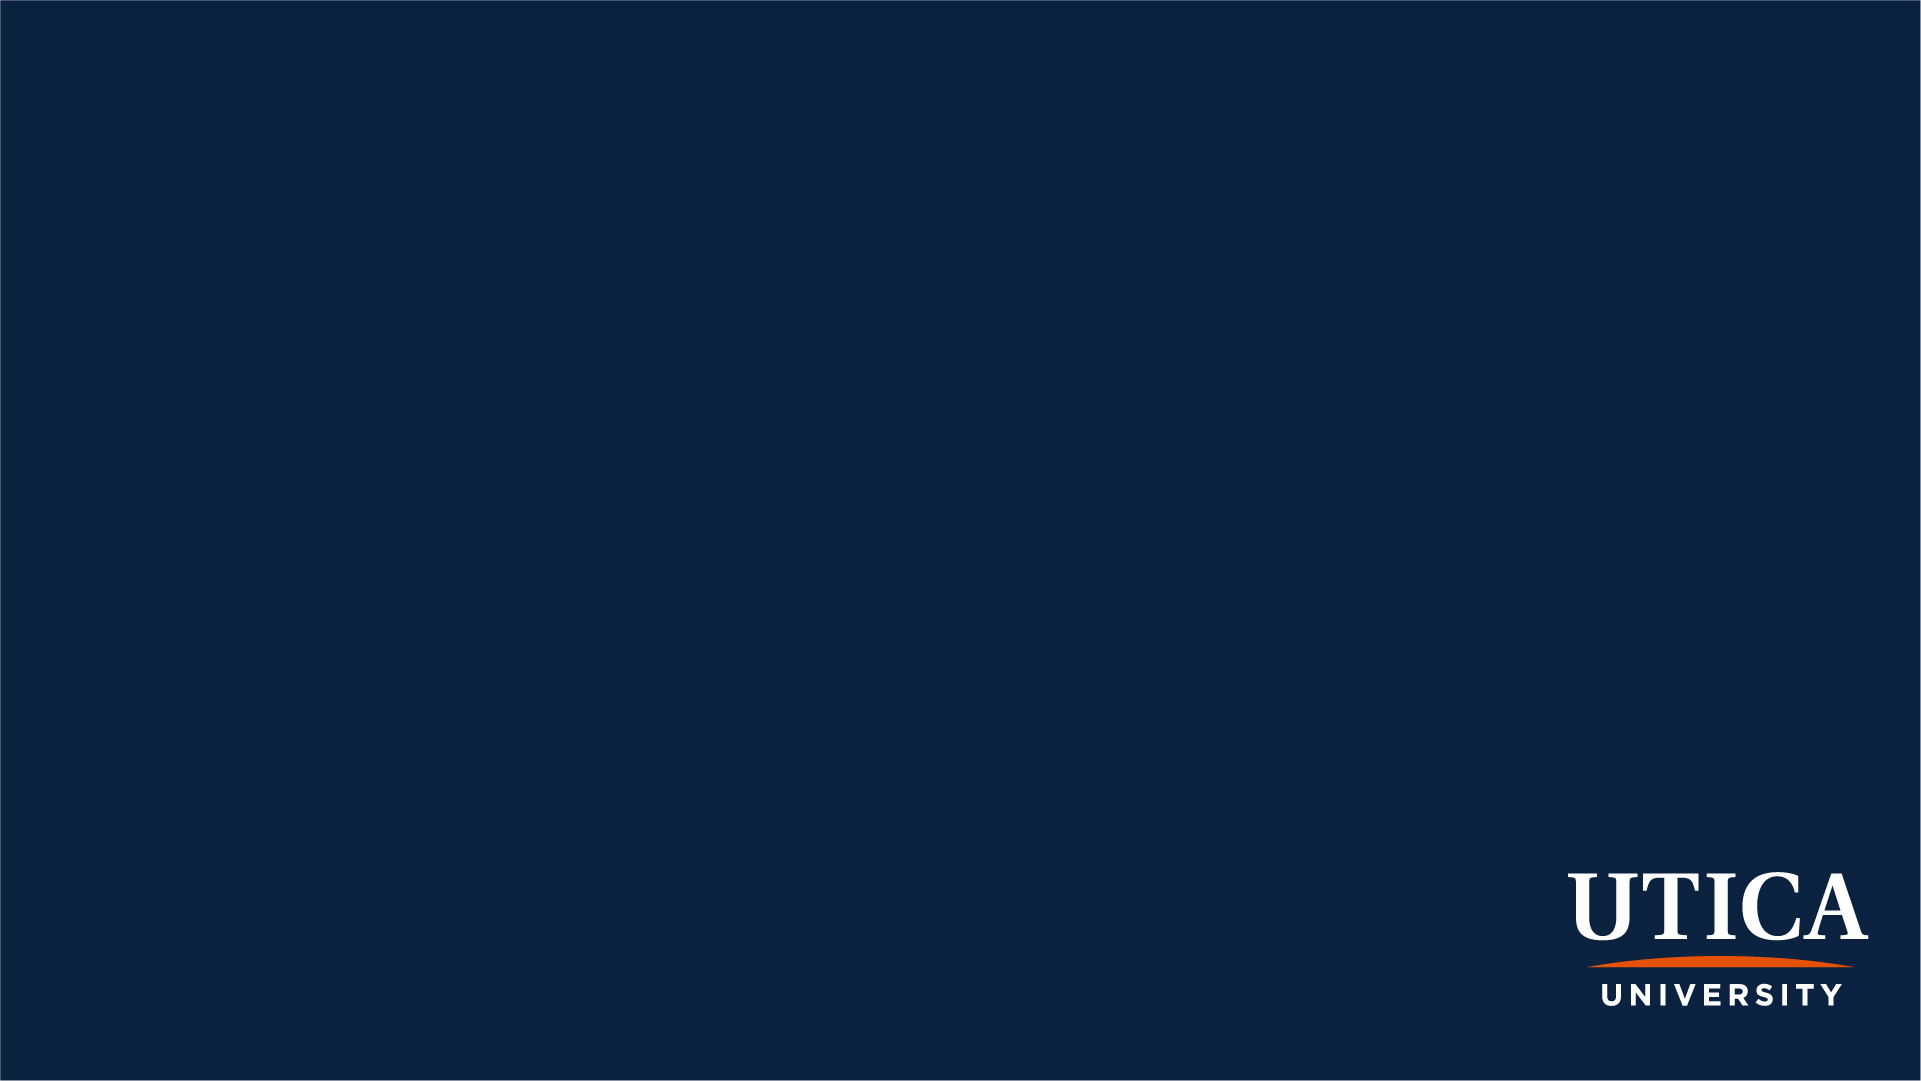 Utica logo in bottom right corner of blue background.